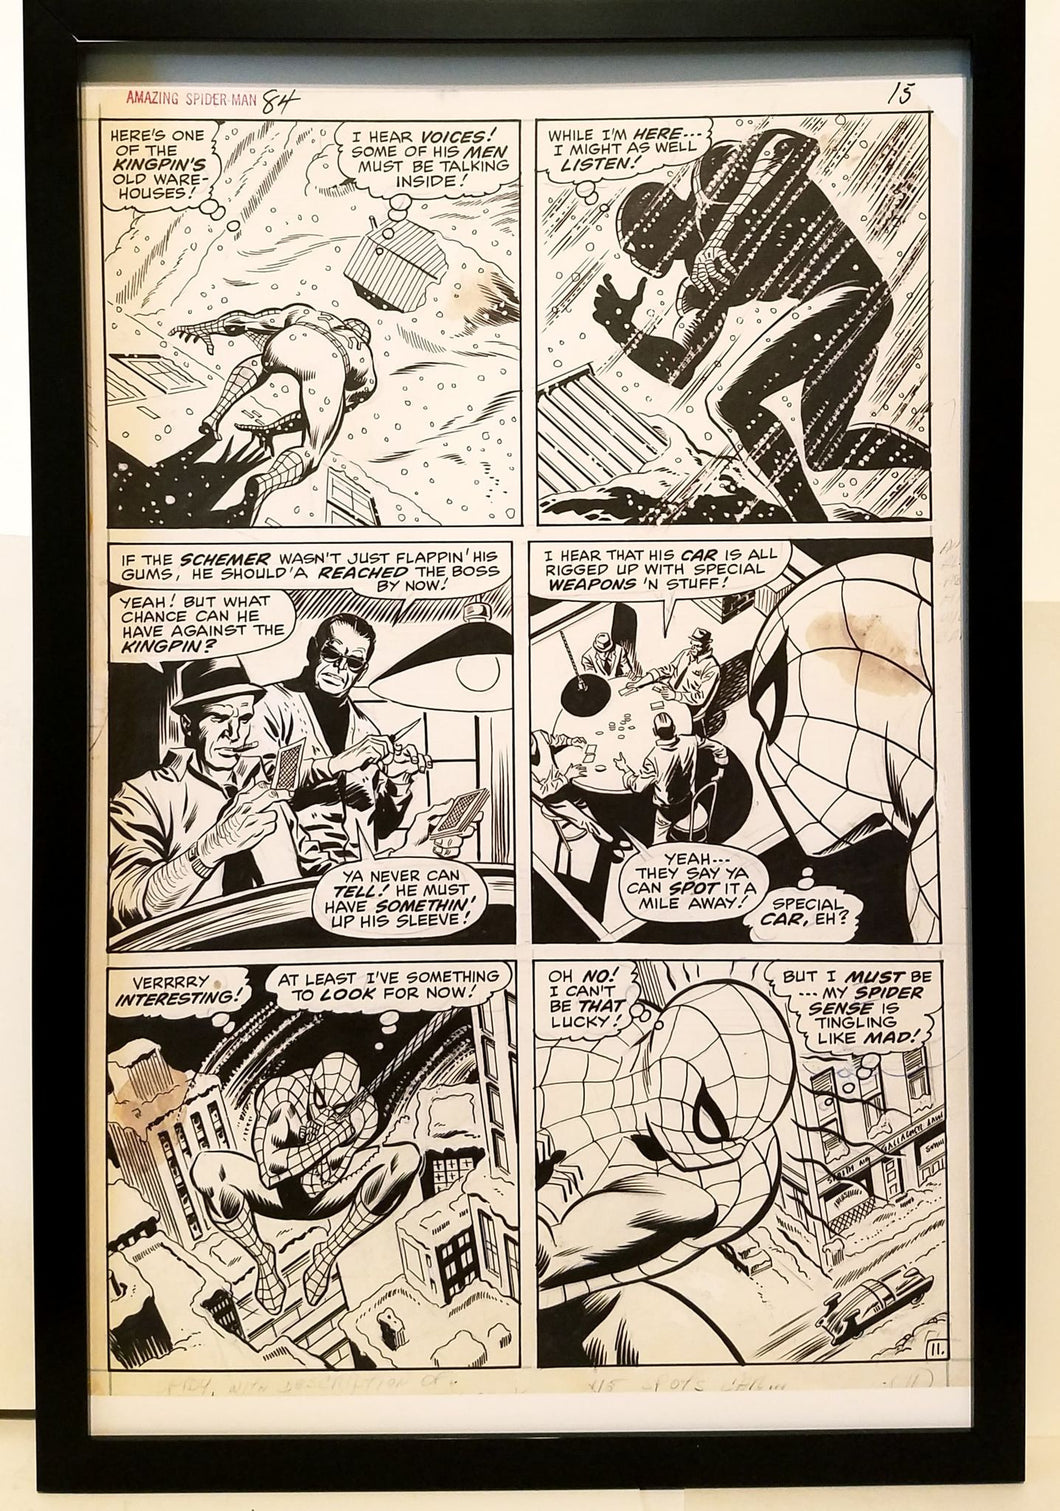 Amazing Spider-Man #84 pg. 11 11x17 FRAMED Original Art Poster Marvel Comics